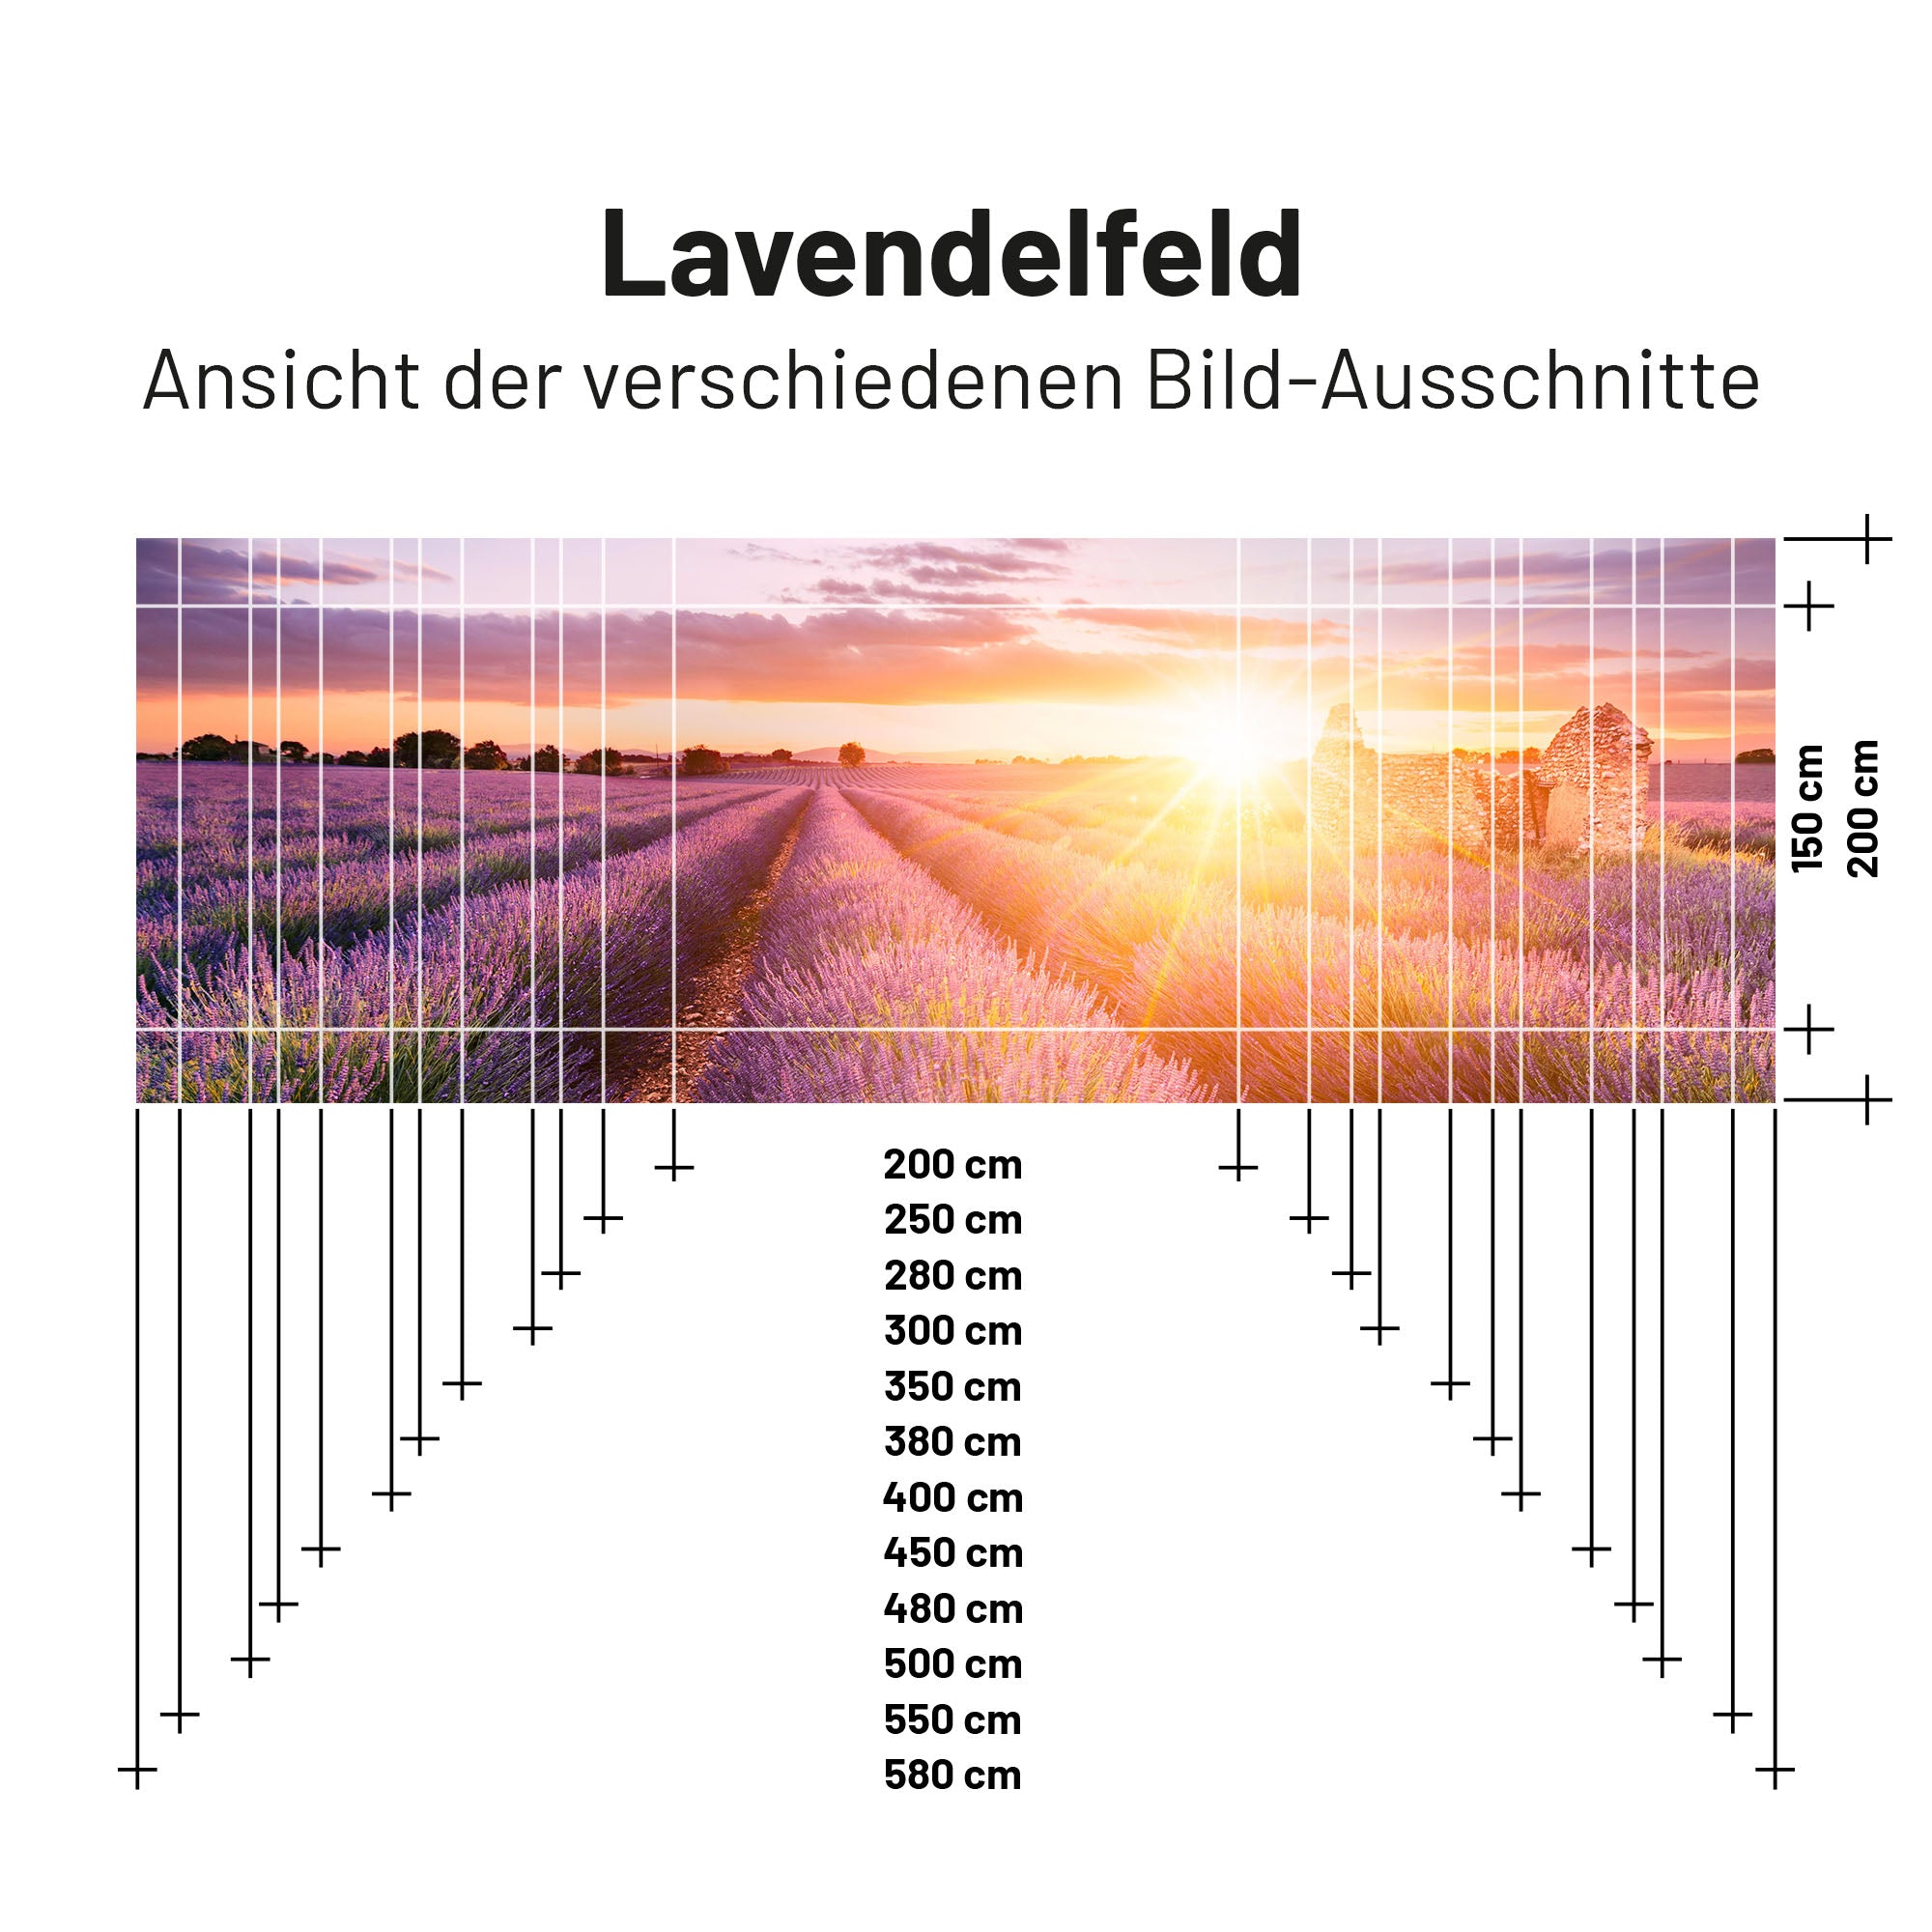 Textil Sonnensegel LAVENDELFELD 200cm Hoch